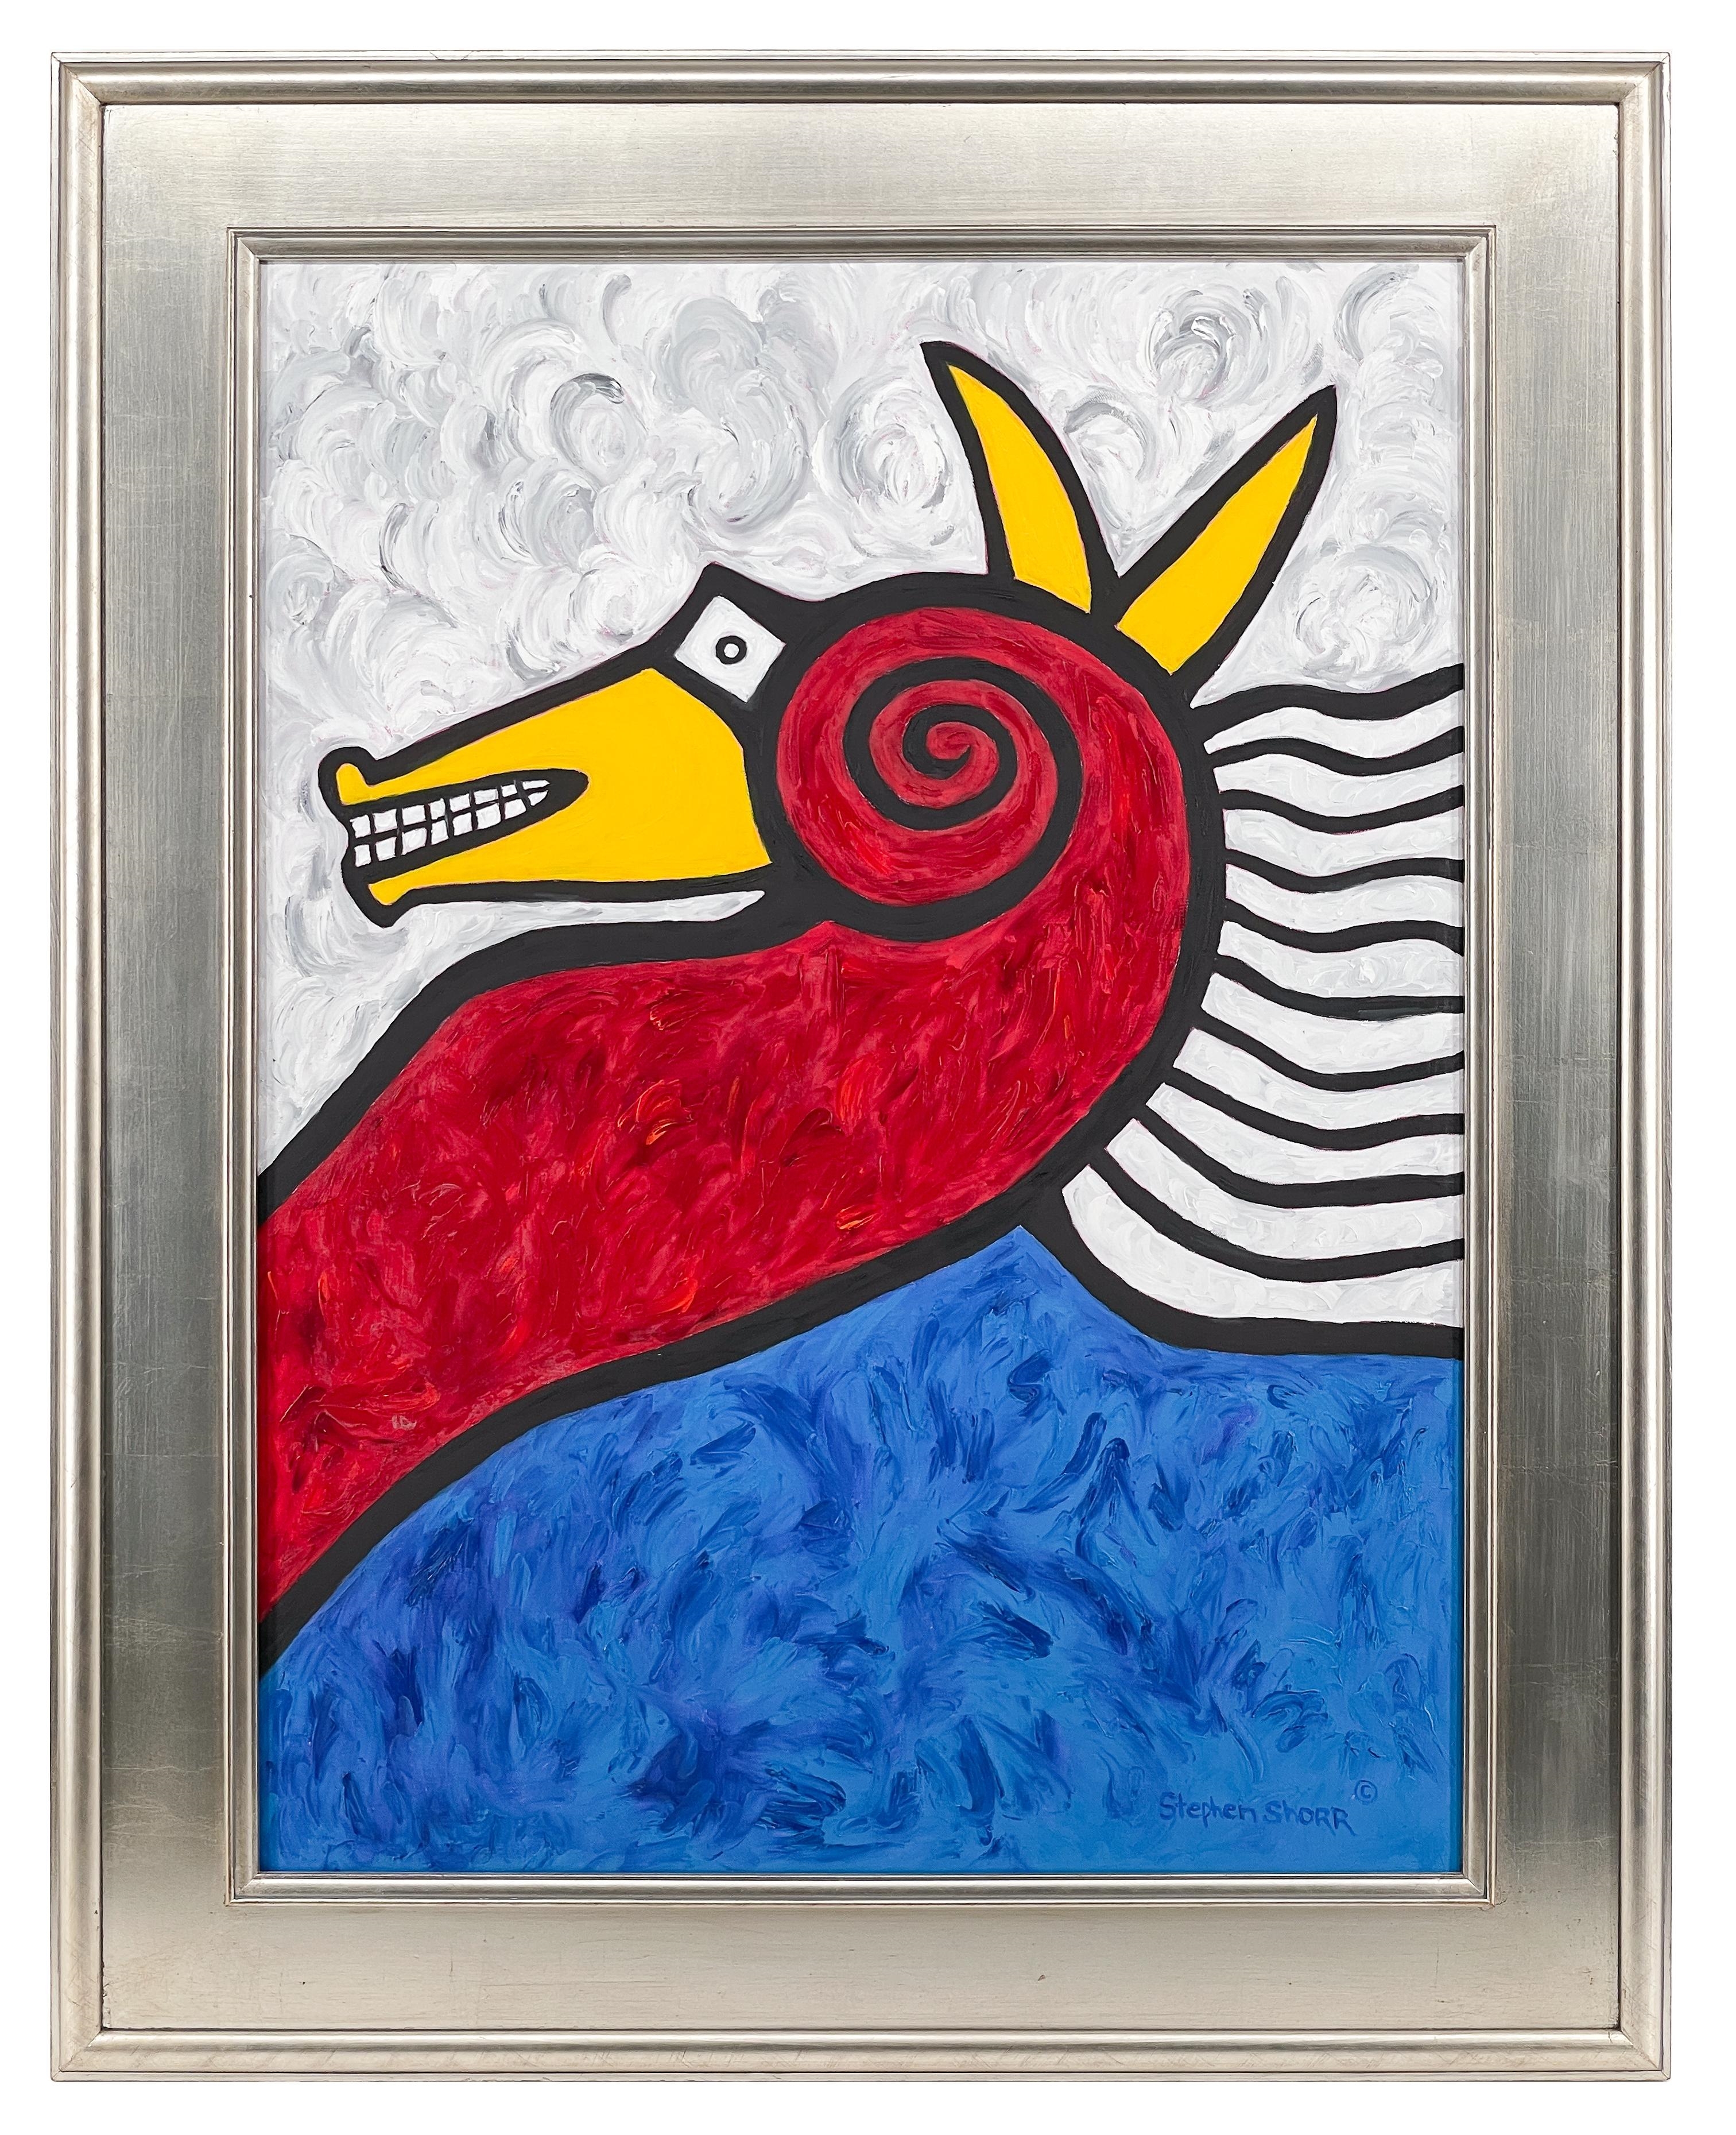 Stephen Shorr (1946-2022) "The Sea Horse" Oil on Canvas - Stephen Shore